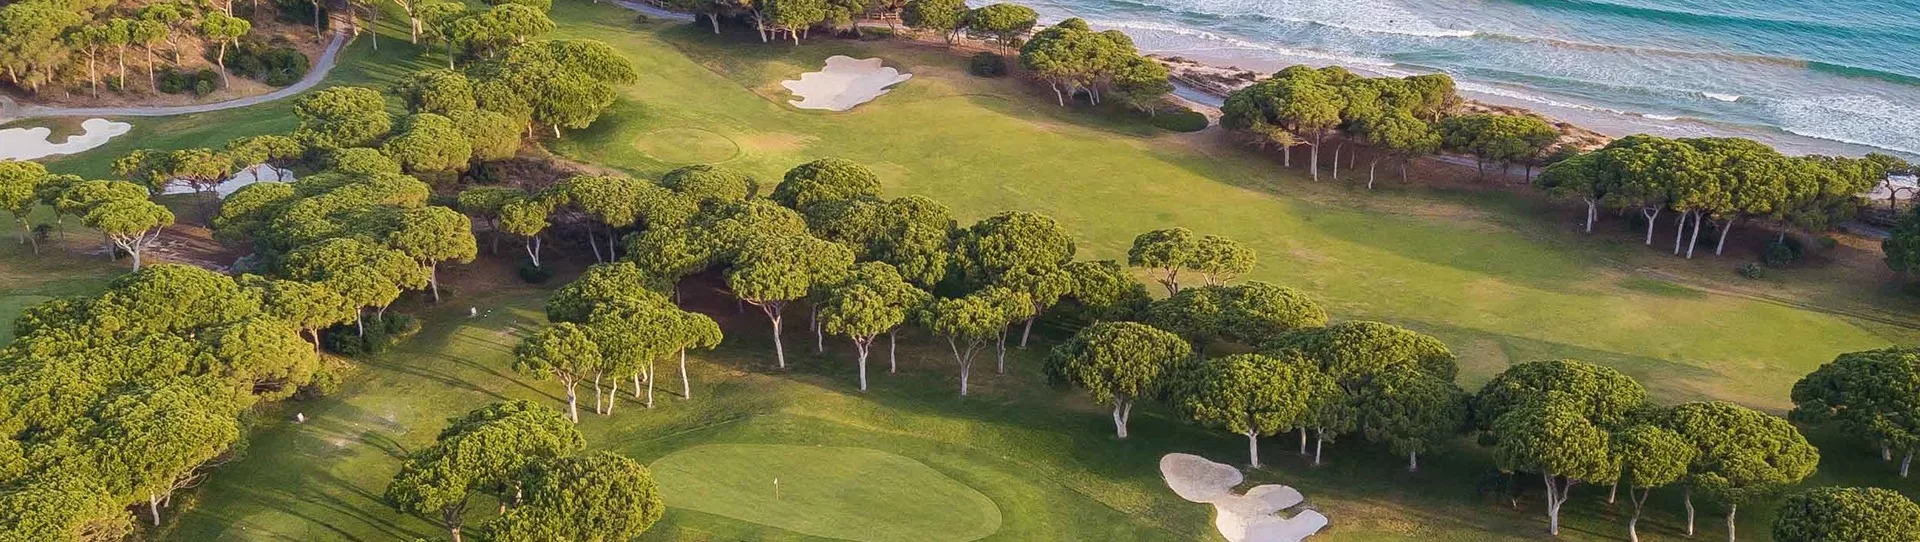 Portugal golf courses - Pine Cliffs Golf - Photo 2